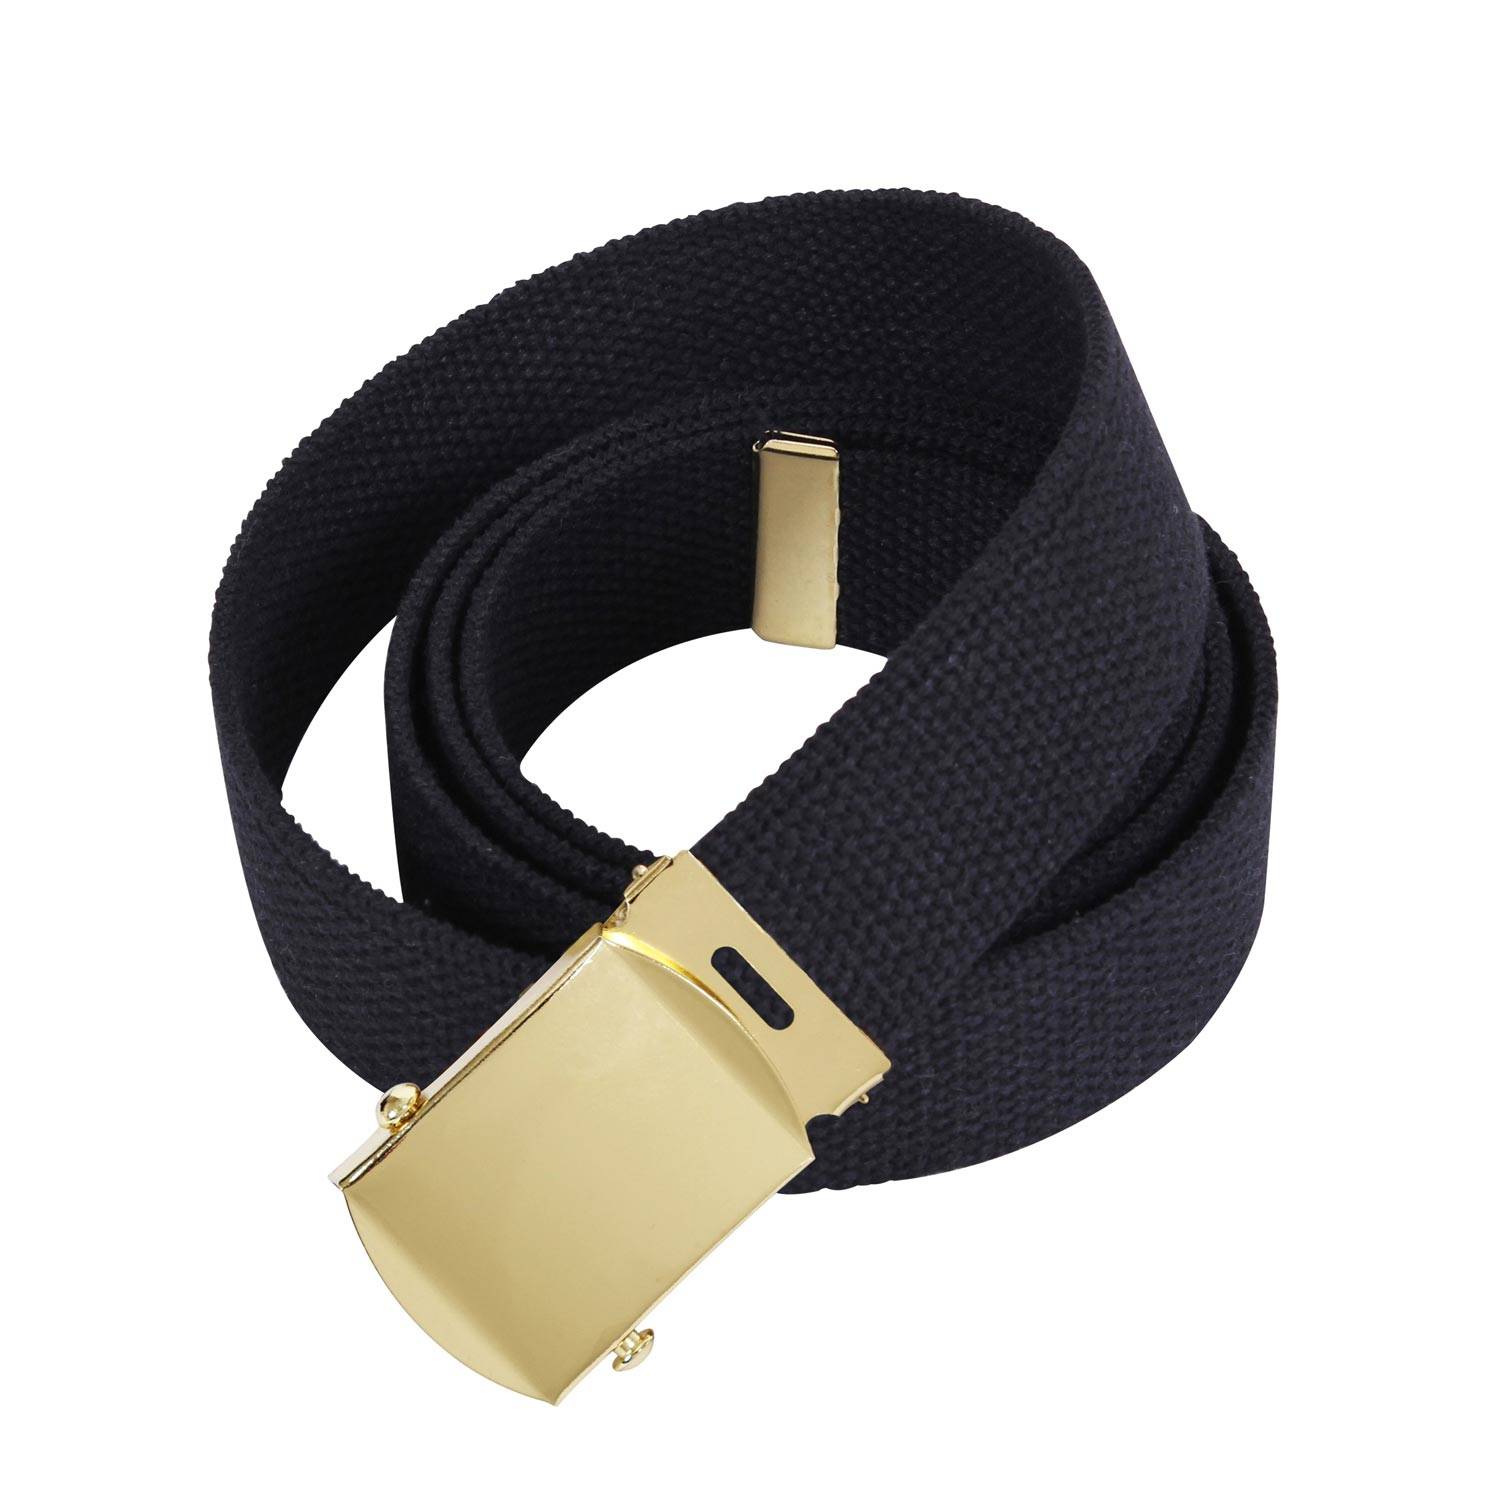 Galls Molded Nylon Duty Belt - Black - SHG048 Blk XL